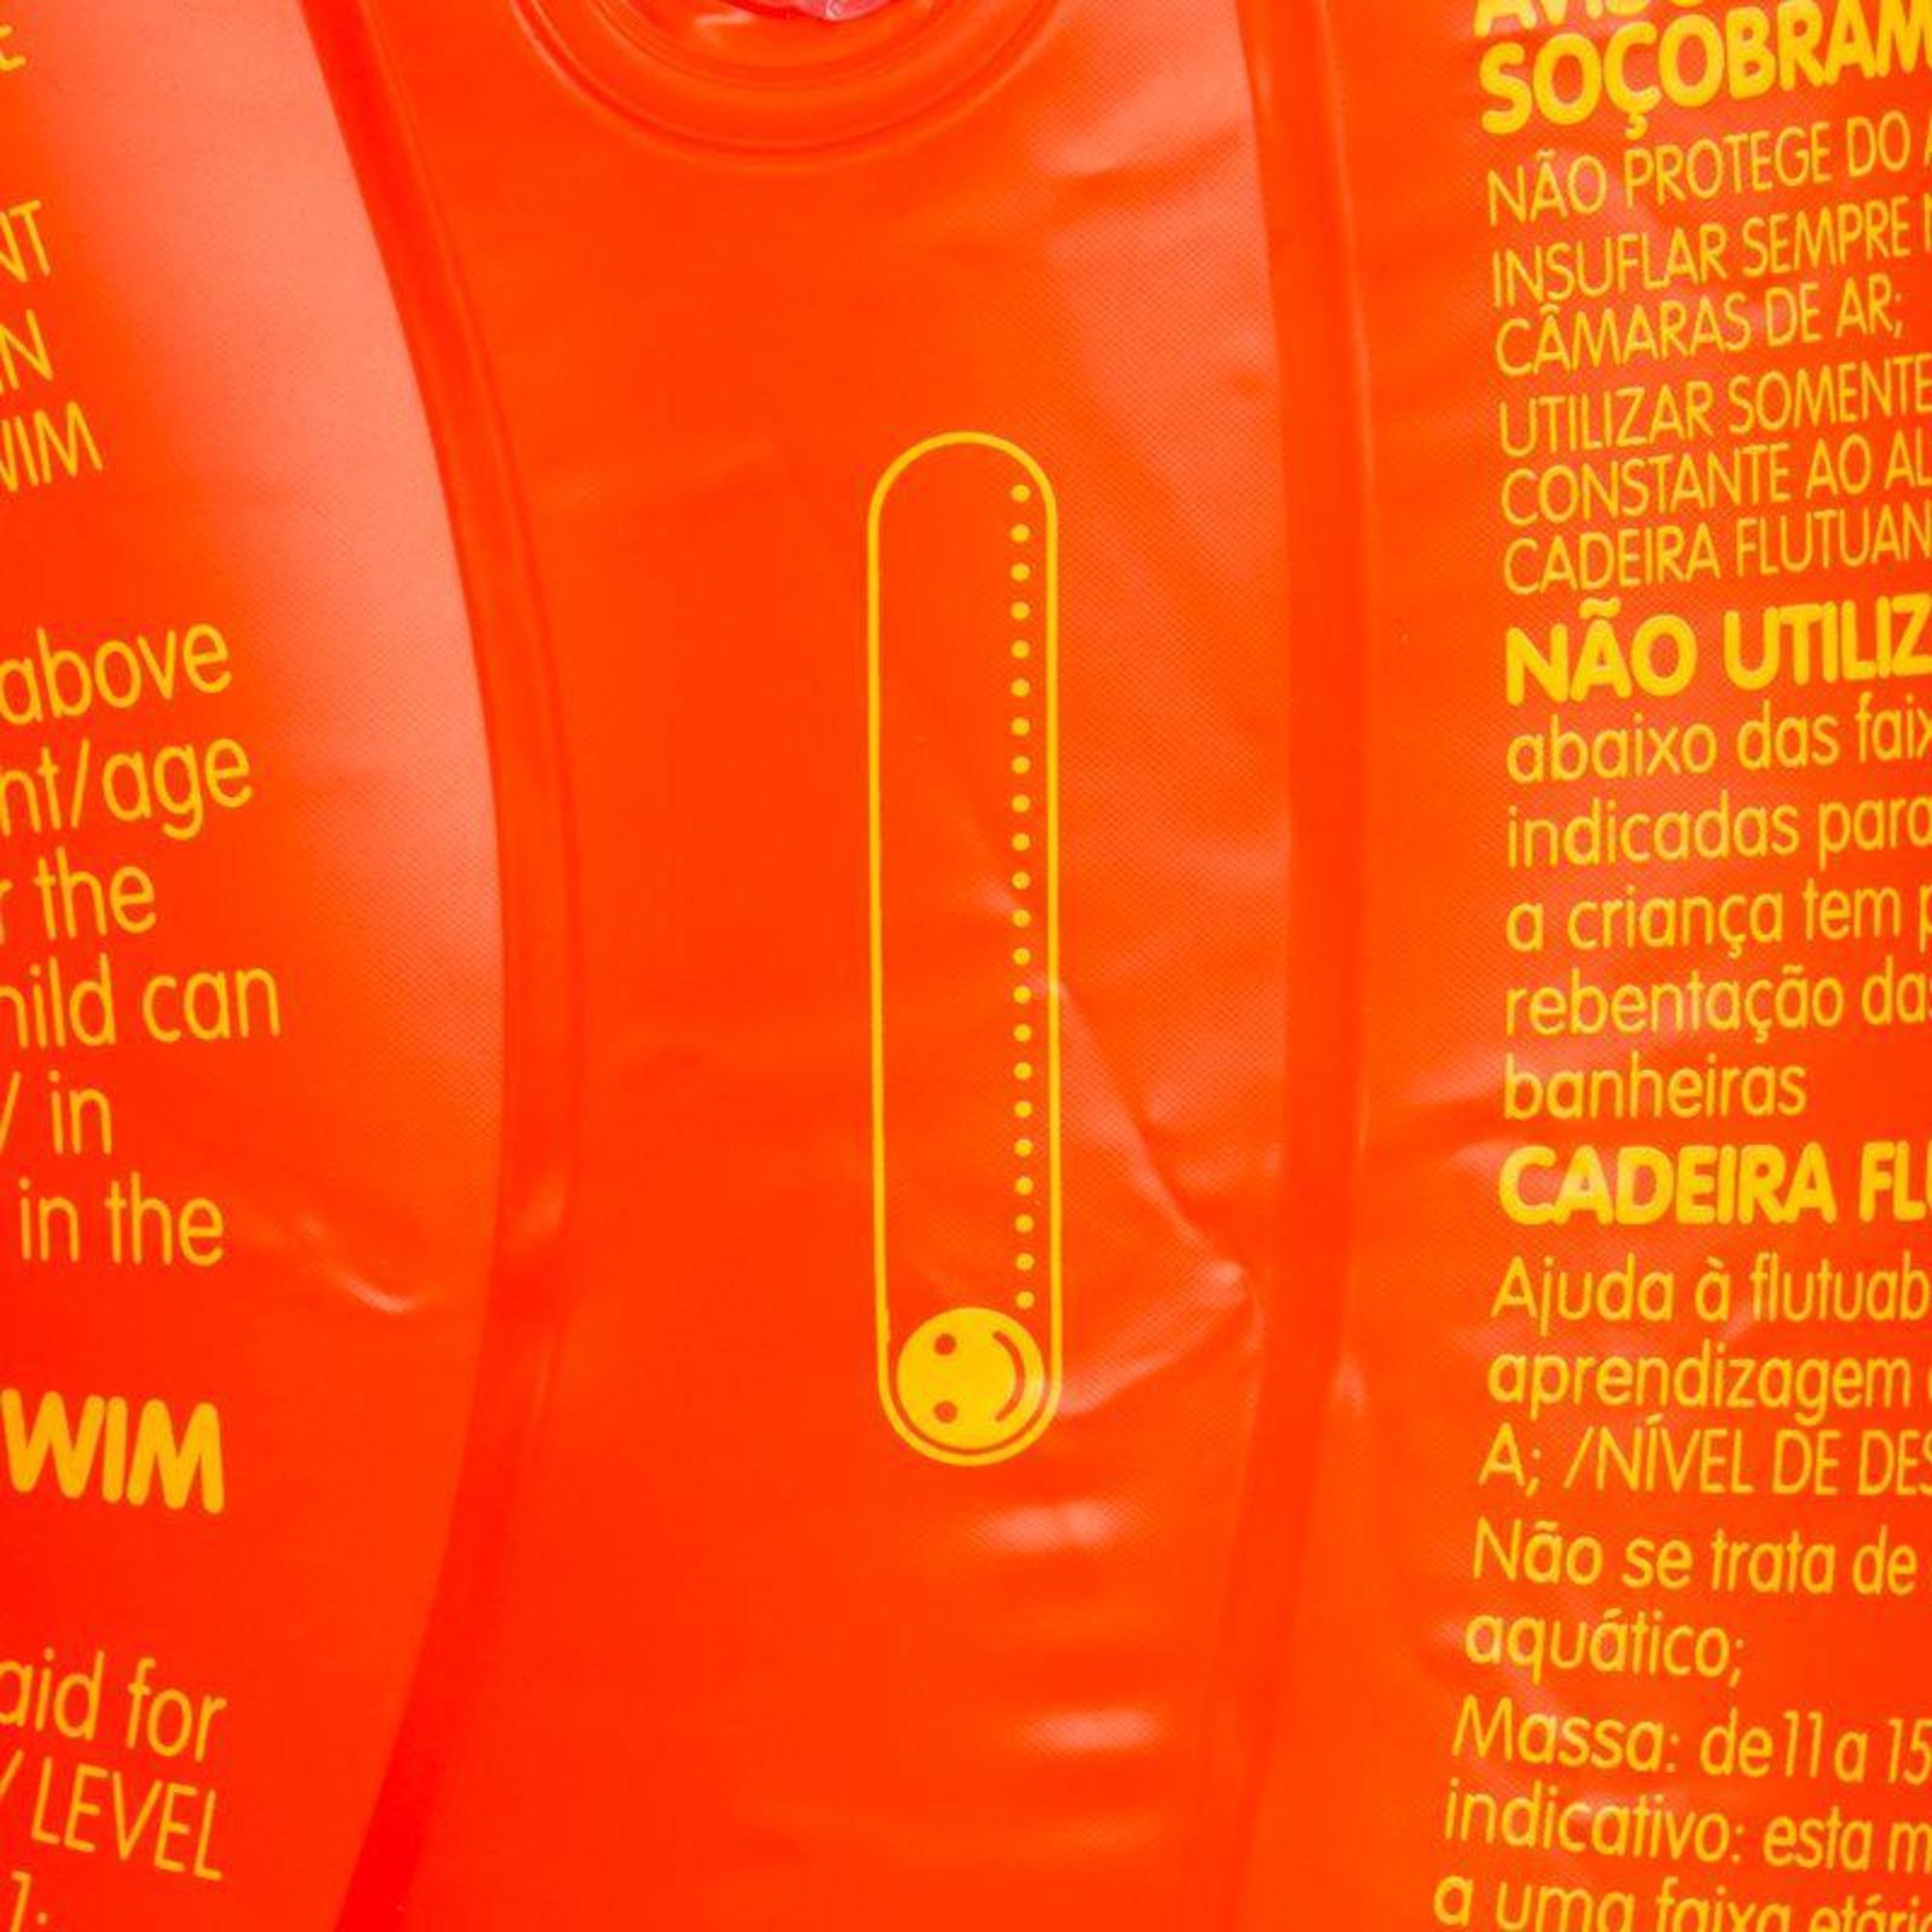 Inflatable Baby Seat Swim Ring, 11-15 Kg orange